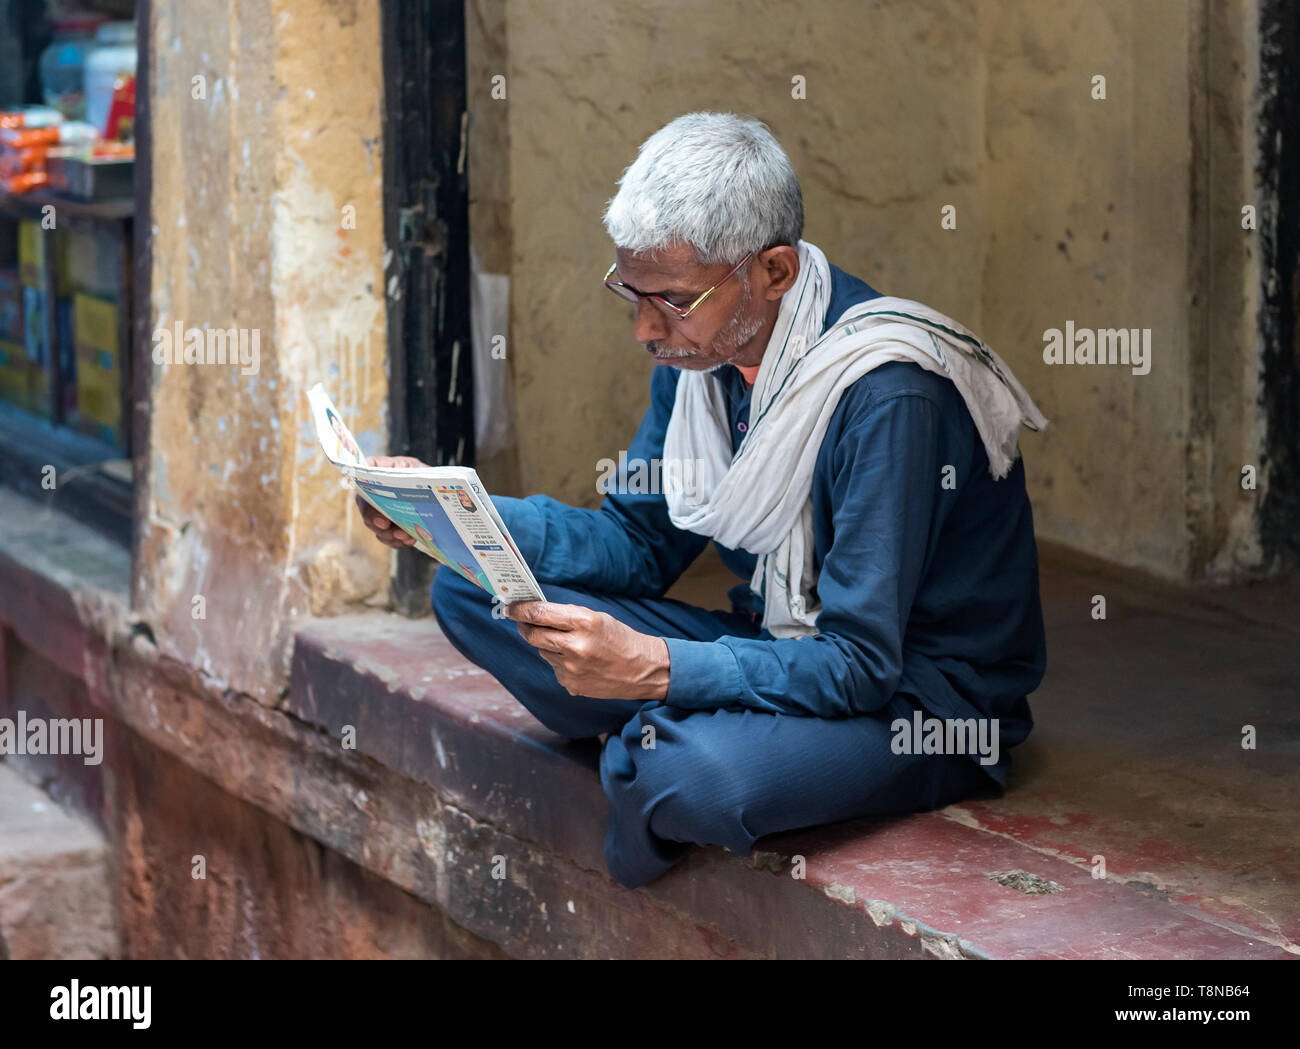 Man reads newspapers, Old City of Varanasi, India Stock Photo